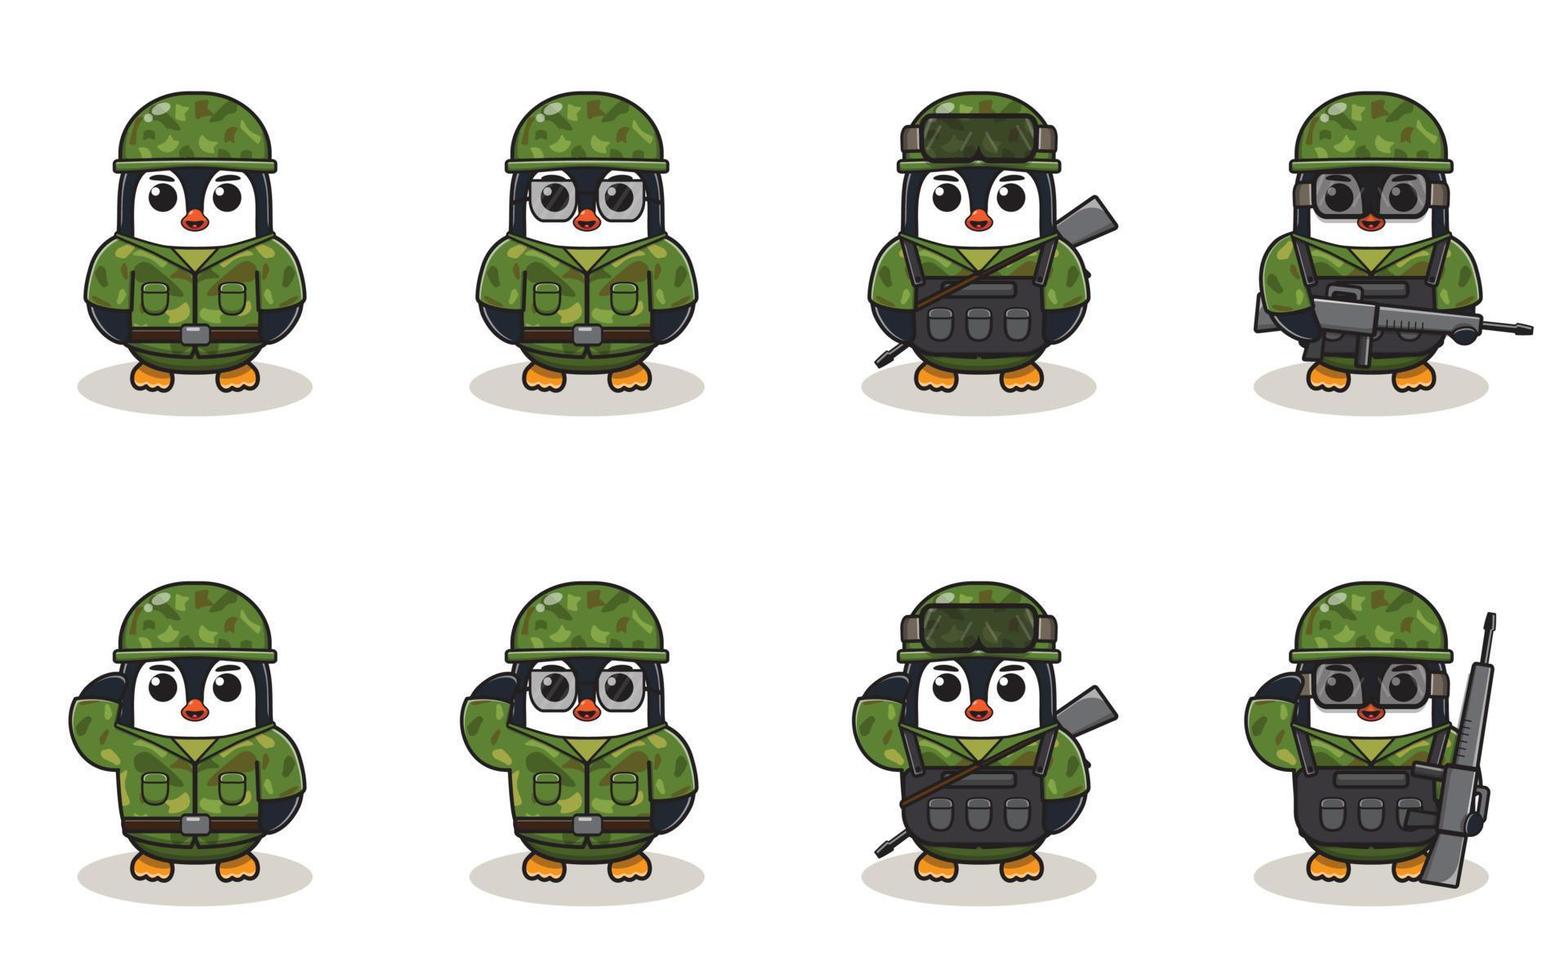 Cute Penguin Army cartoon vector